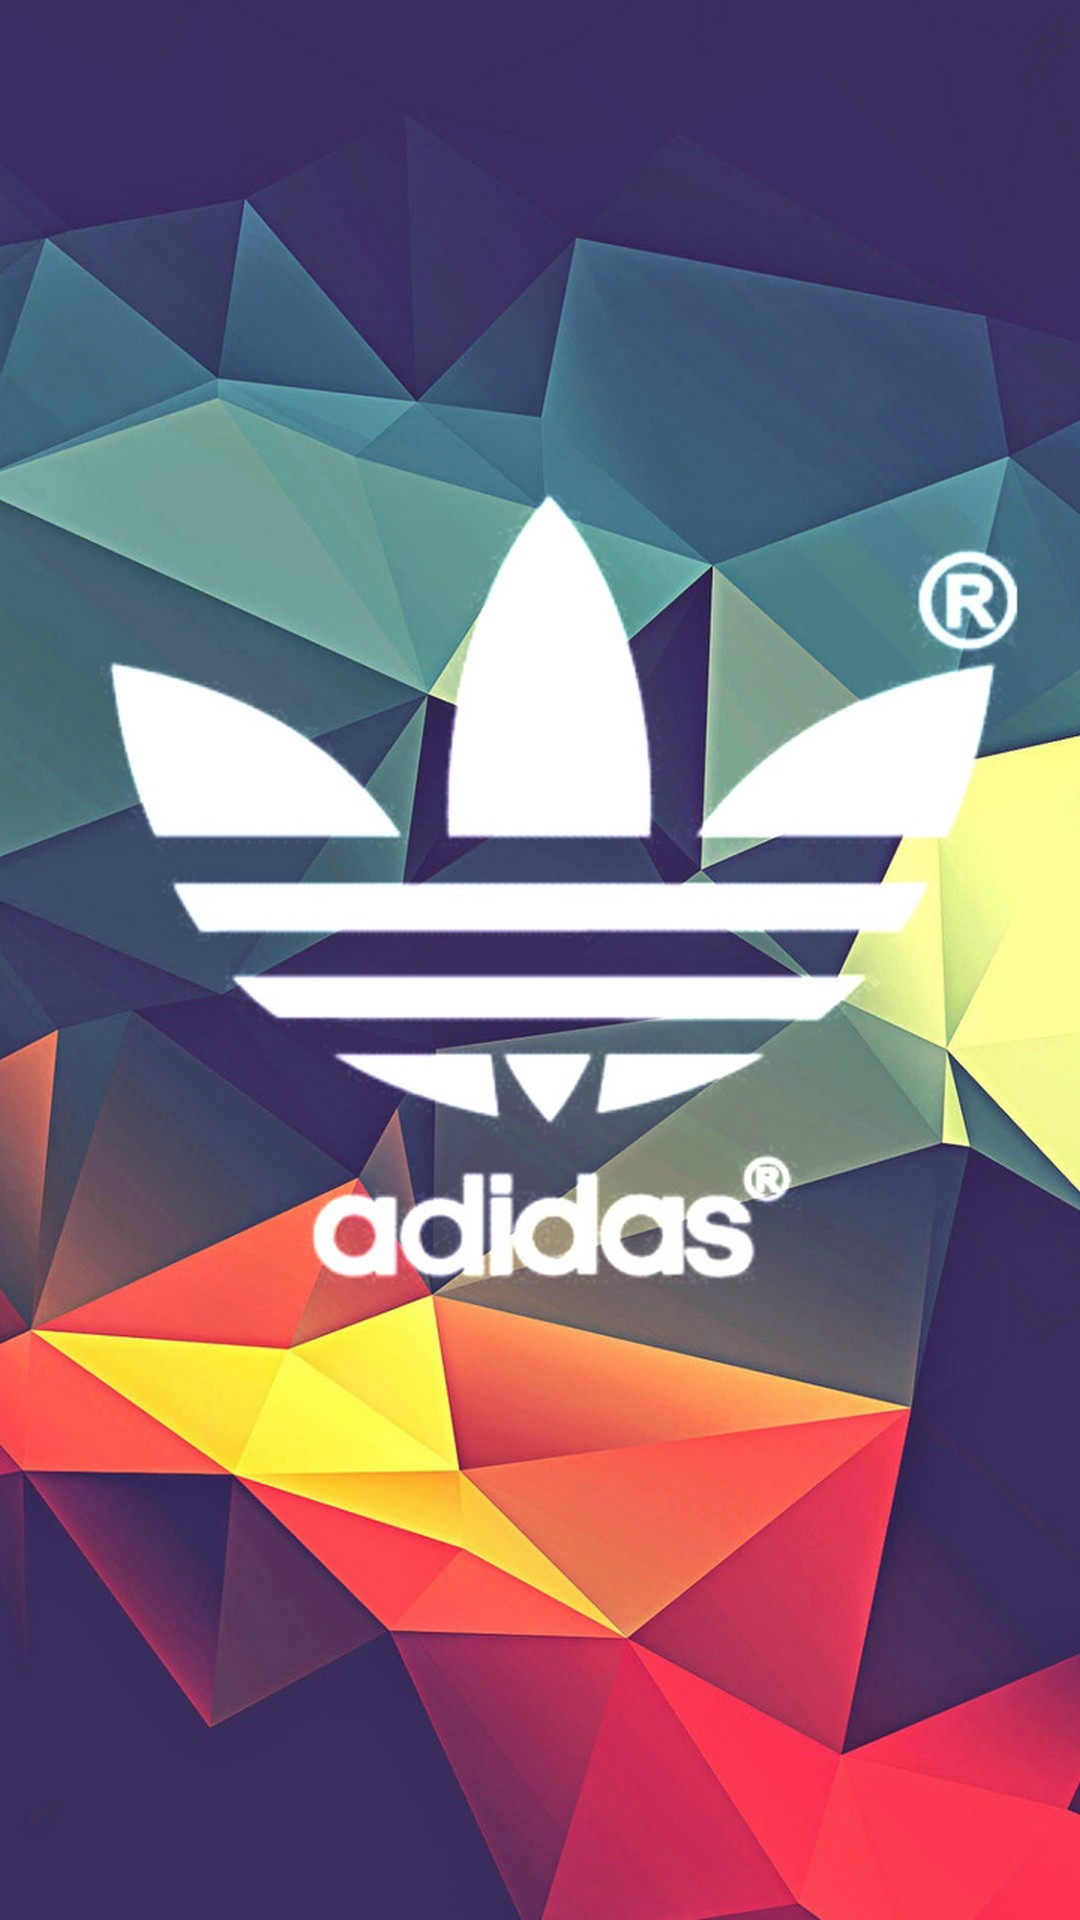 Adidas Images